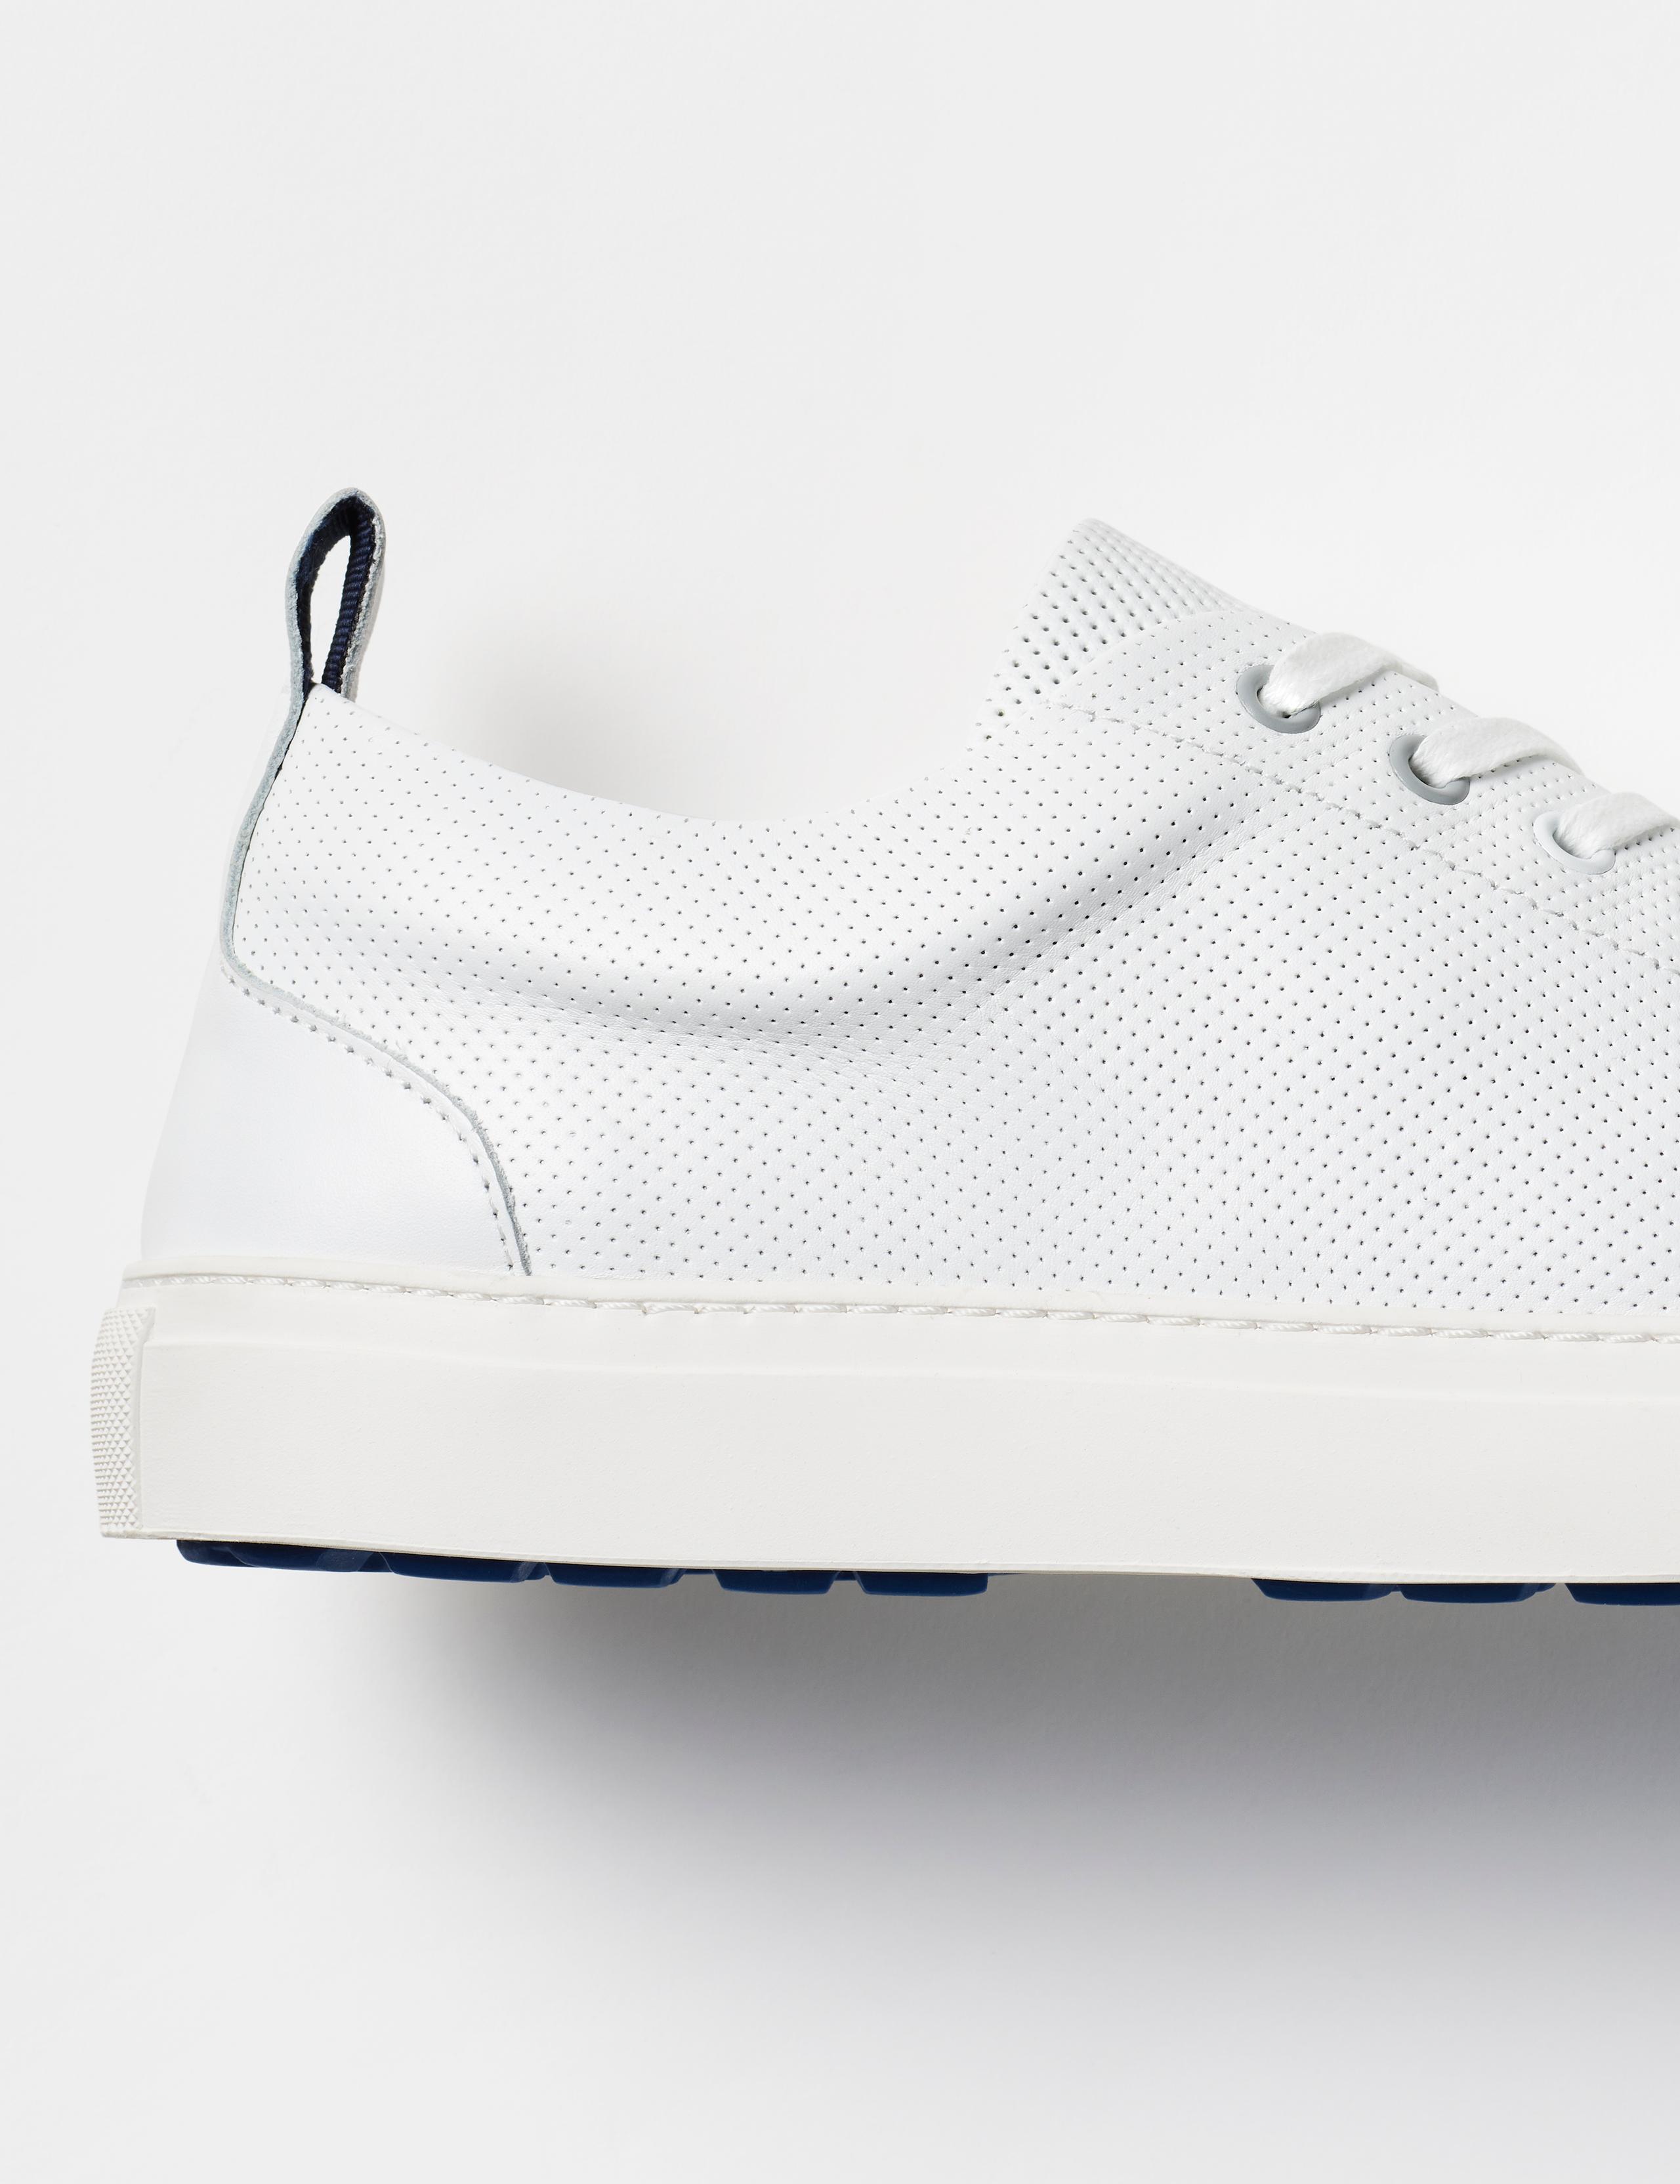 Profile of white Dalton Low-Top Sneaker